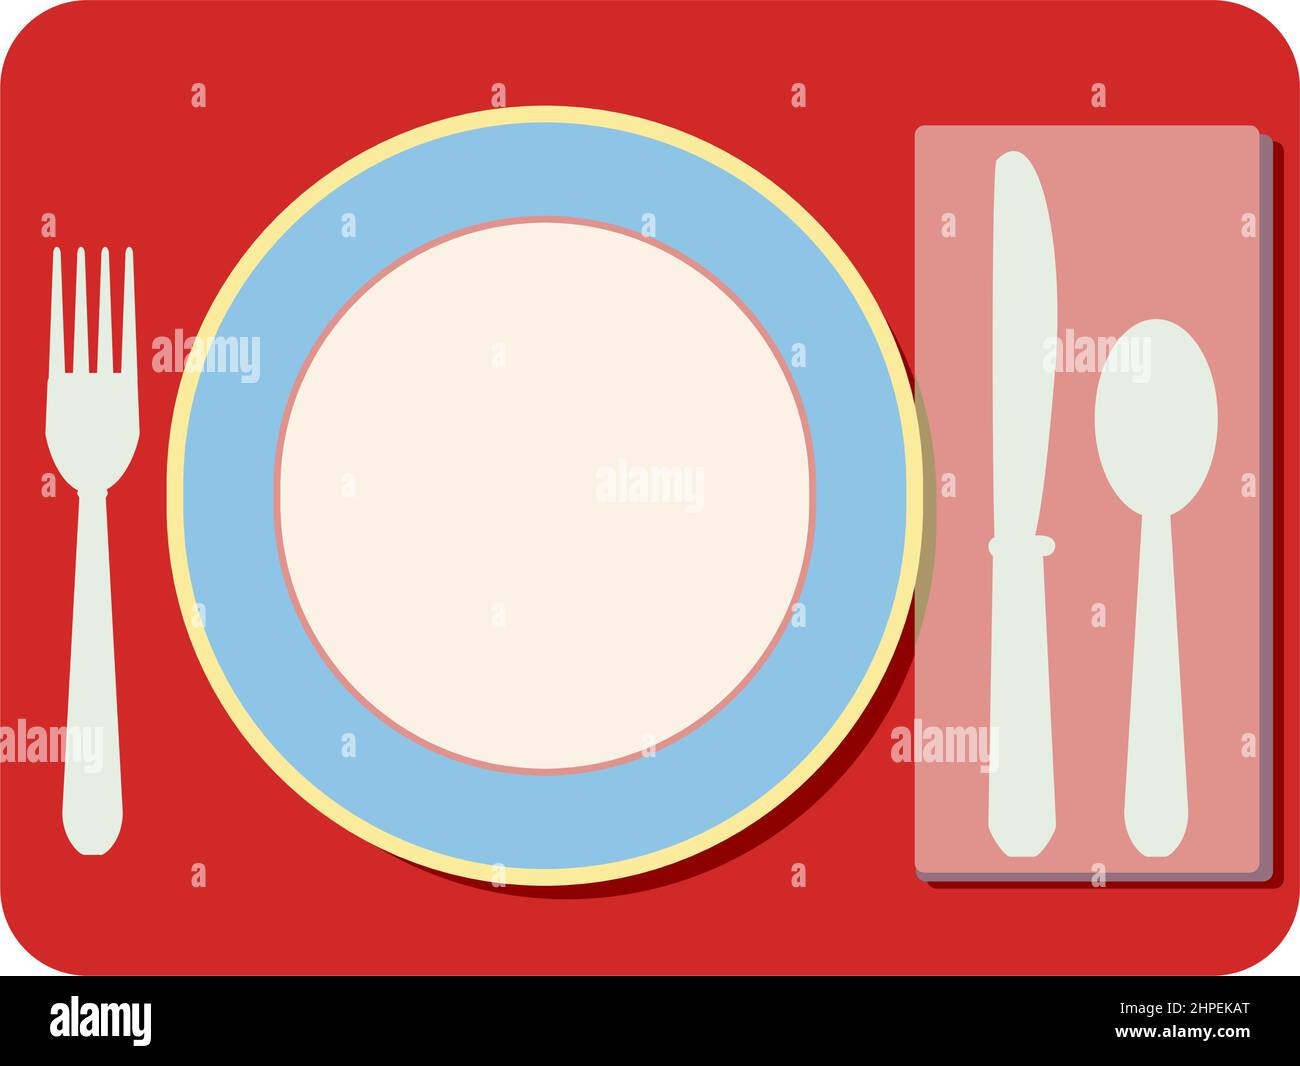 table plate, utensils menu graphic Stock Vector